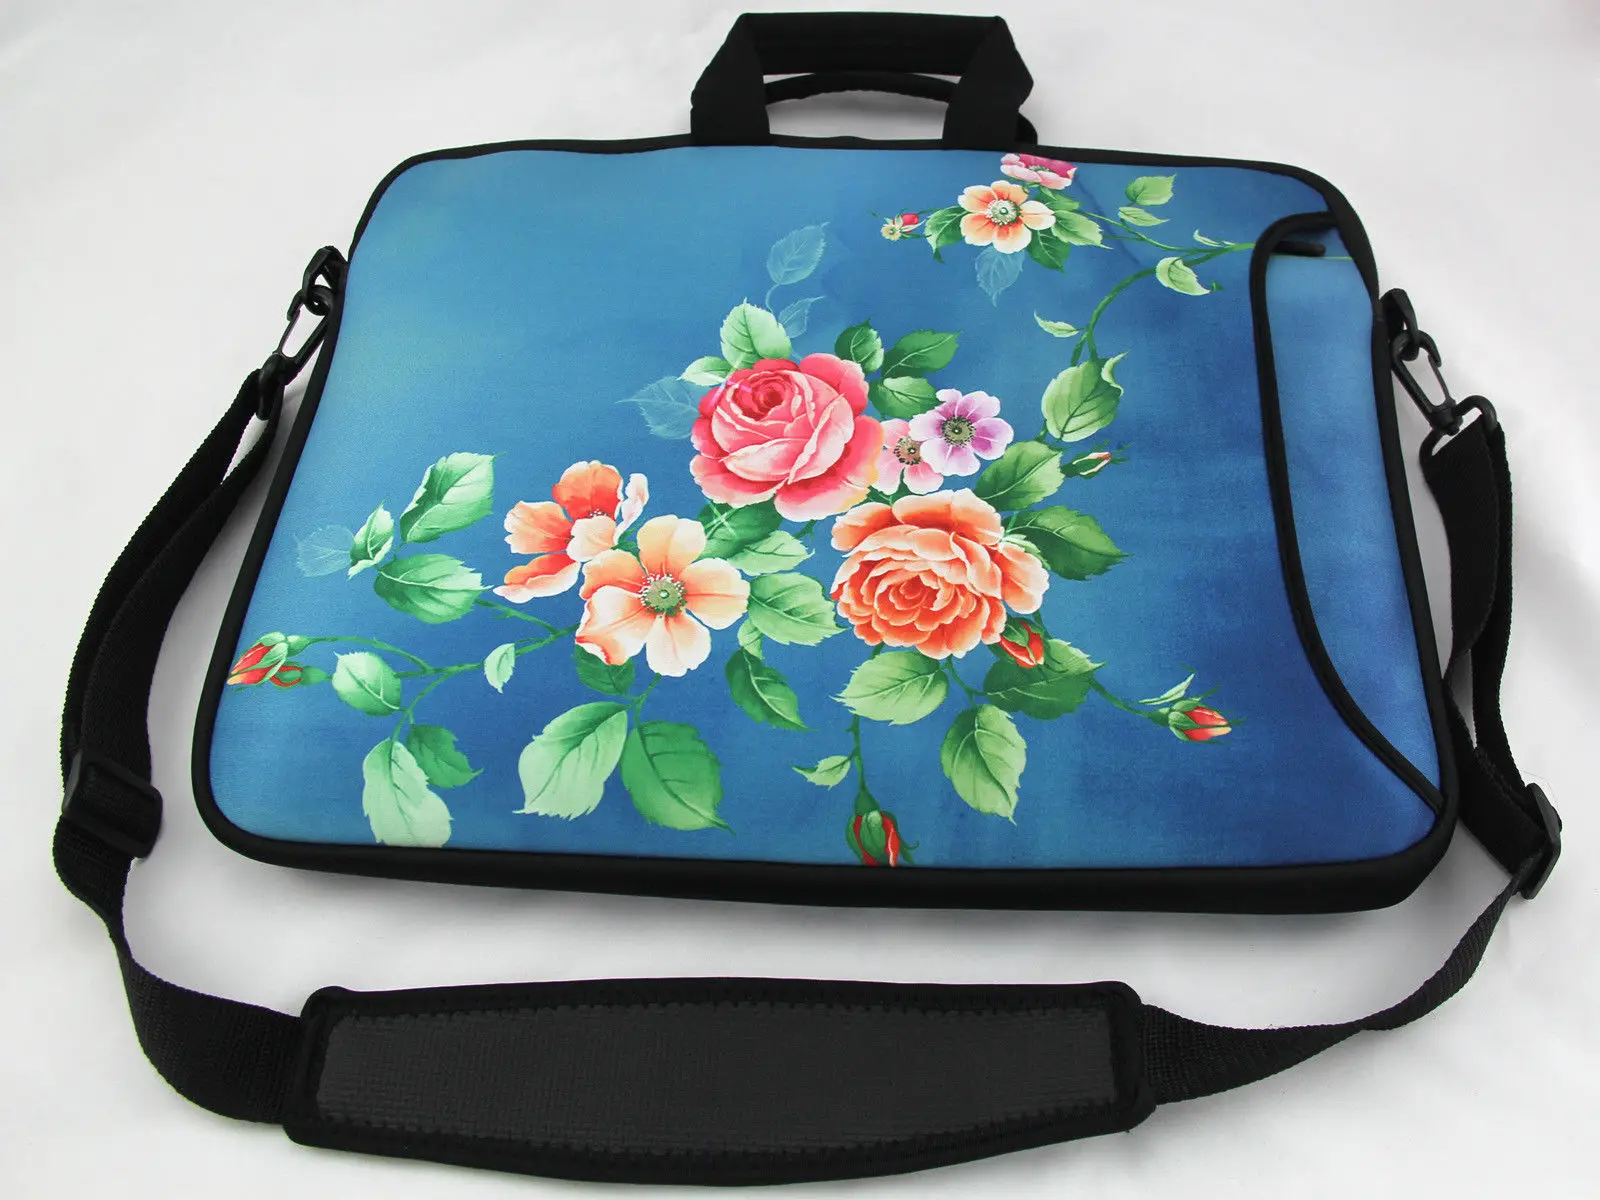 blue dragon shoulder bag for women 2020 handbag 13 3 15 15 6 16 14 11 12 laptop bag case for macbook huawei mi hp lenovo free global shipping